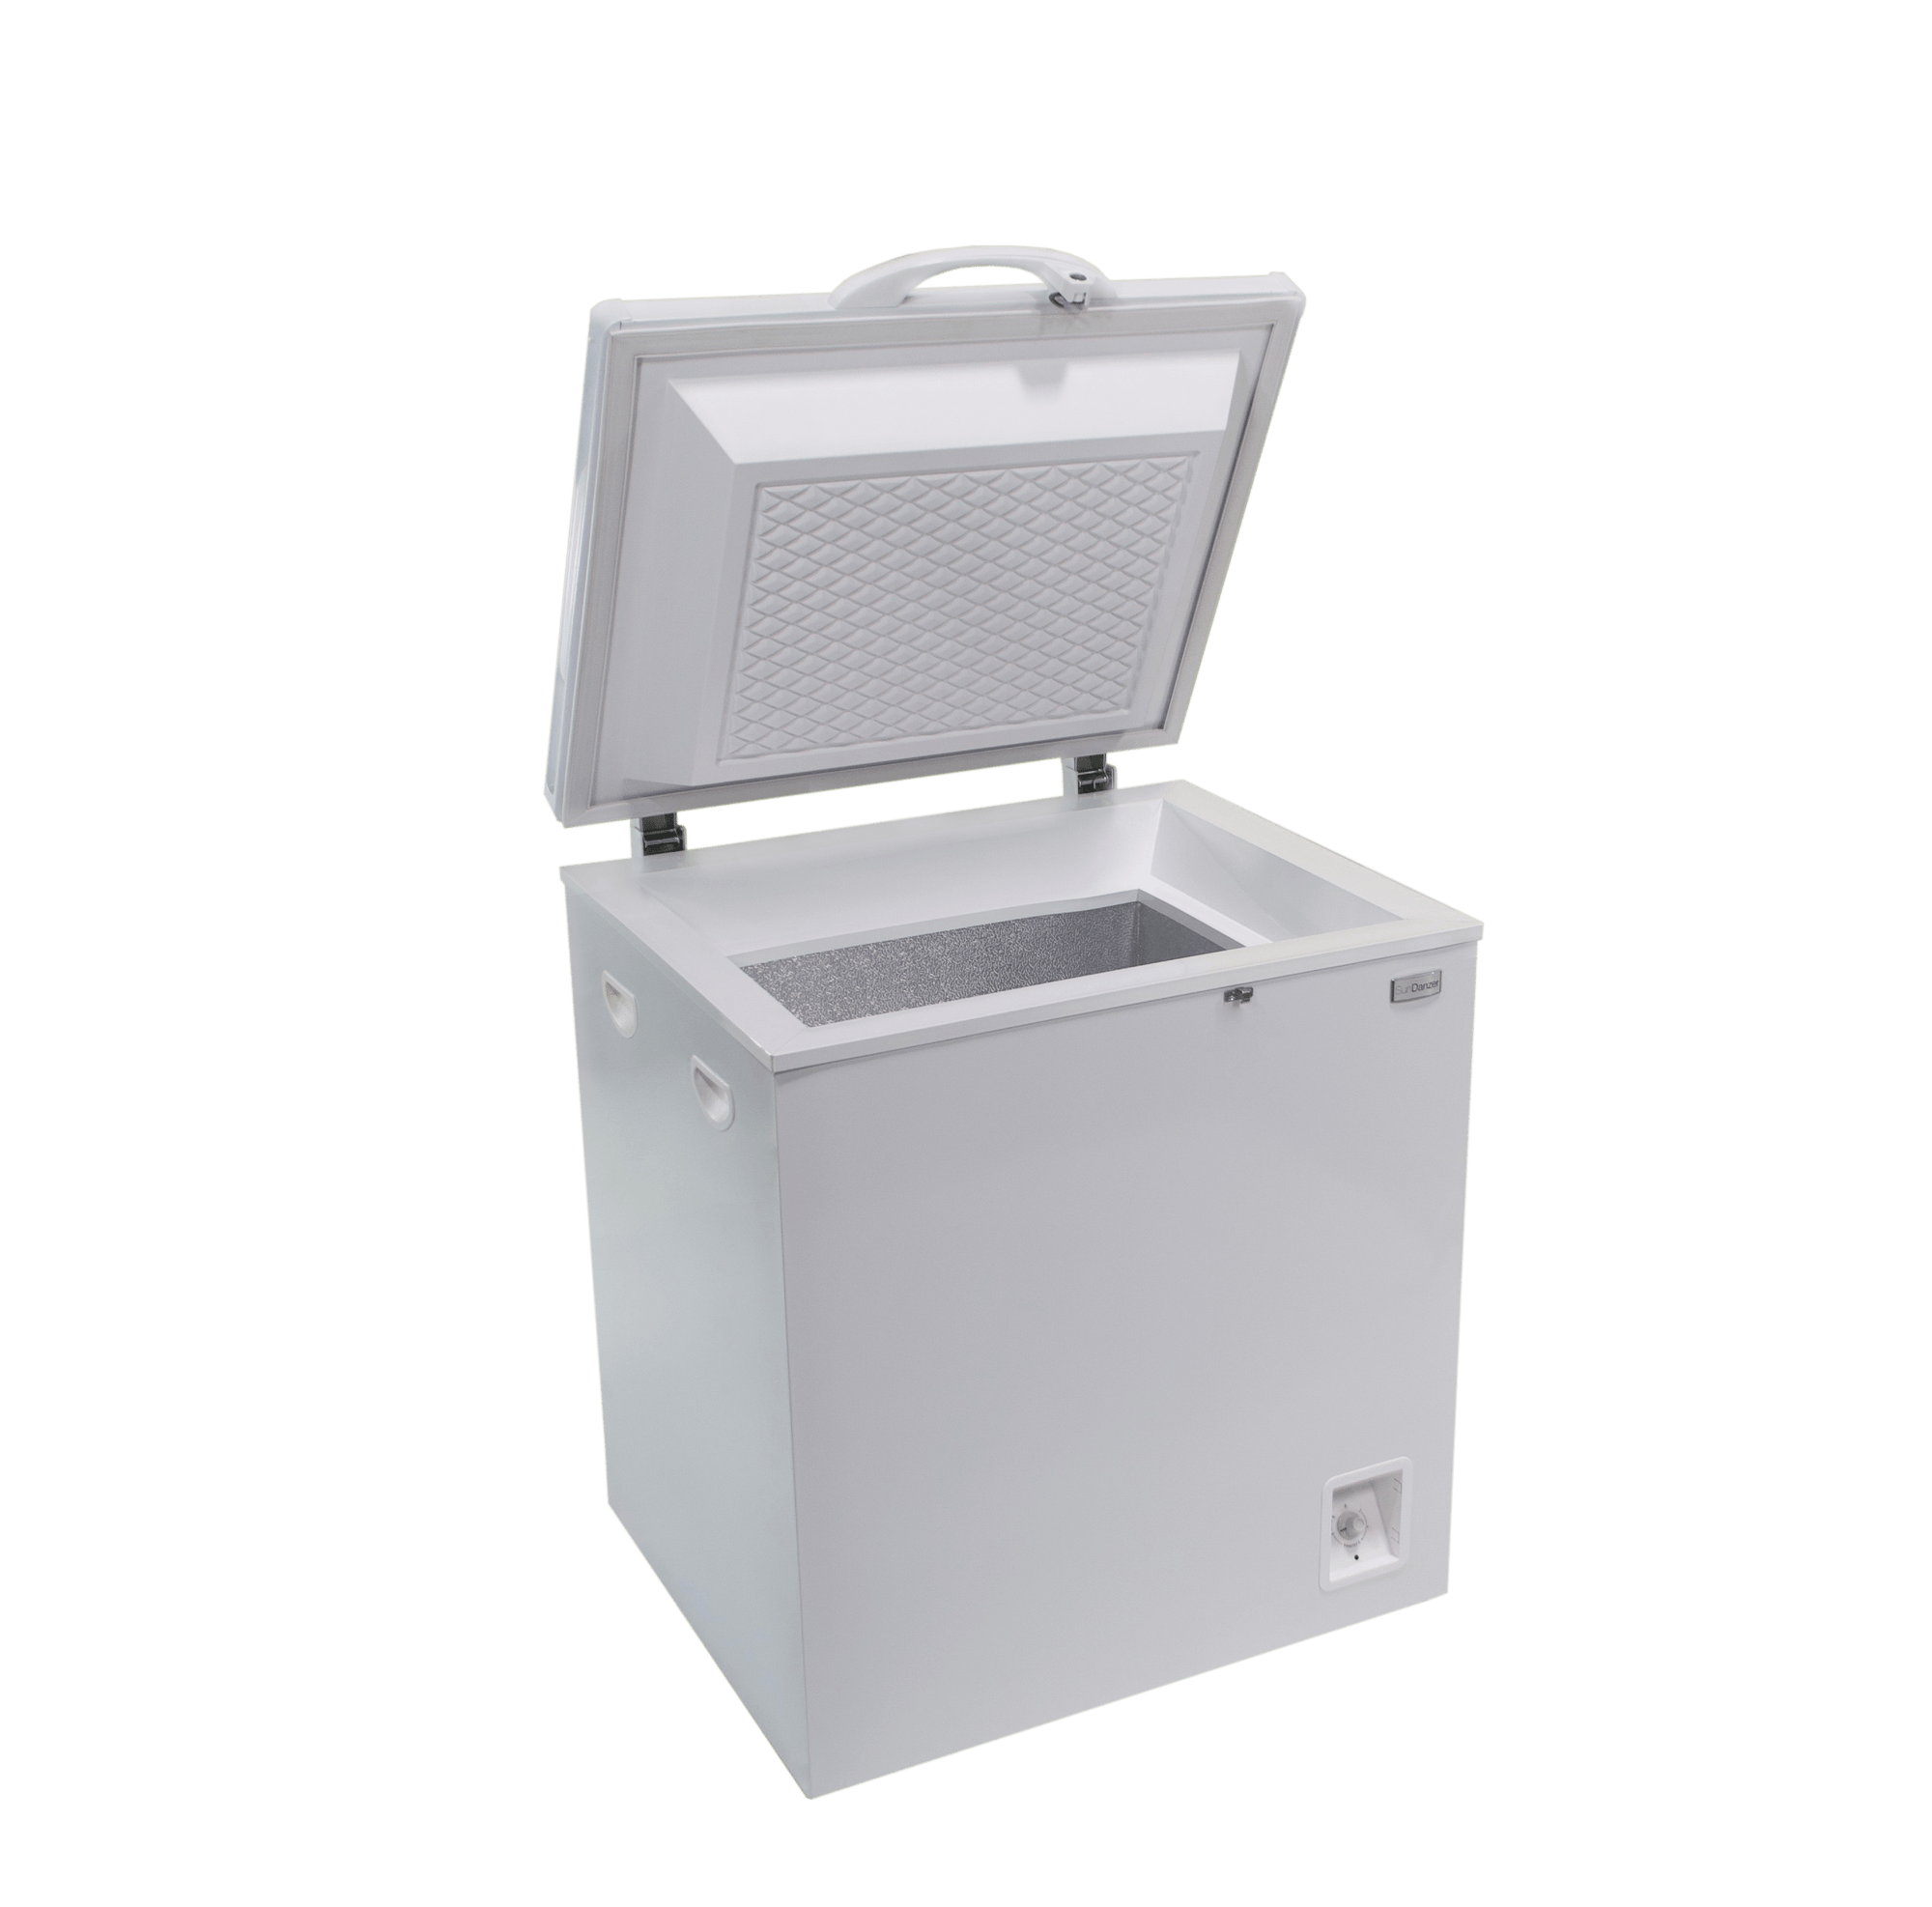 Sundanzer Solar Appliances Add A/C Power Option (+ $120.00) Sundanzer DCF50 50 Litre (Liter) 1.8 Cu. Ft. Solar DC 12v/24v Chest Freezer